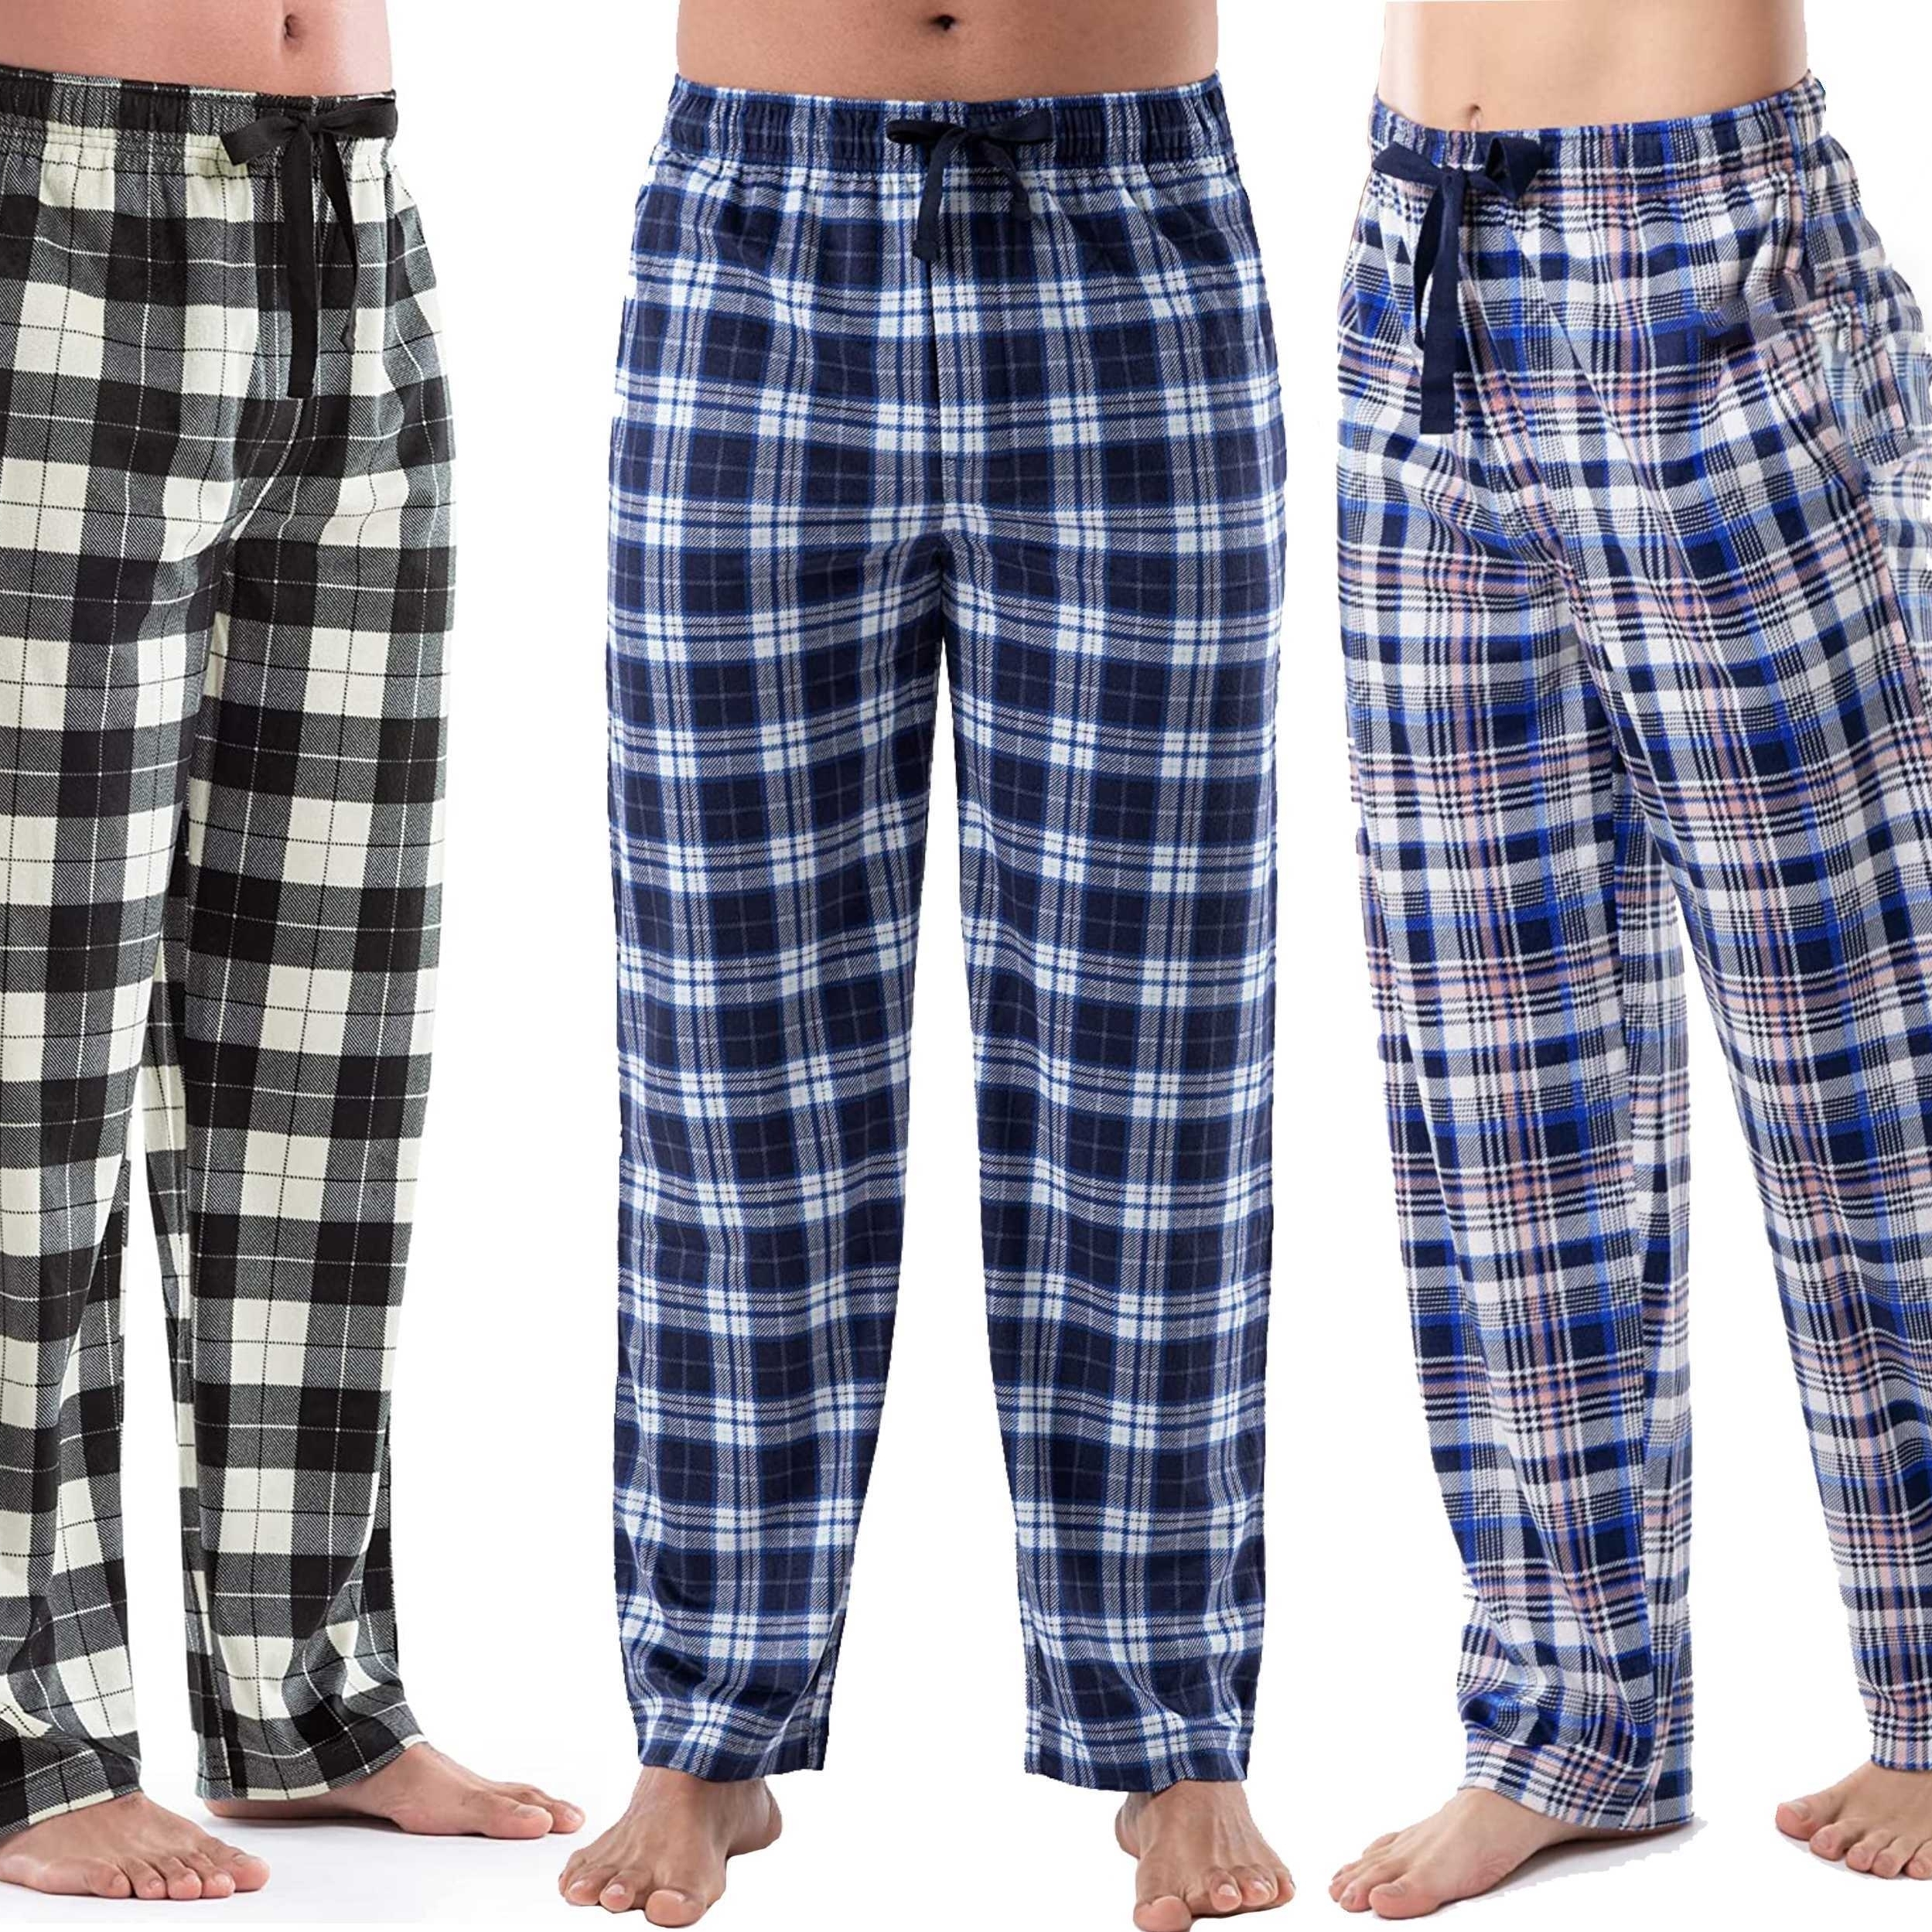 3 Pack: Men's Soft Micro Fleece Plaid Print Pajama Lounge Pants - Medium